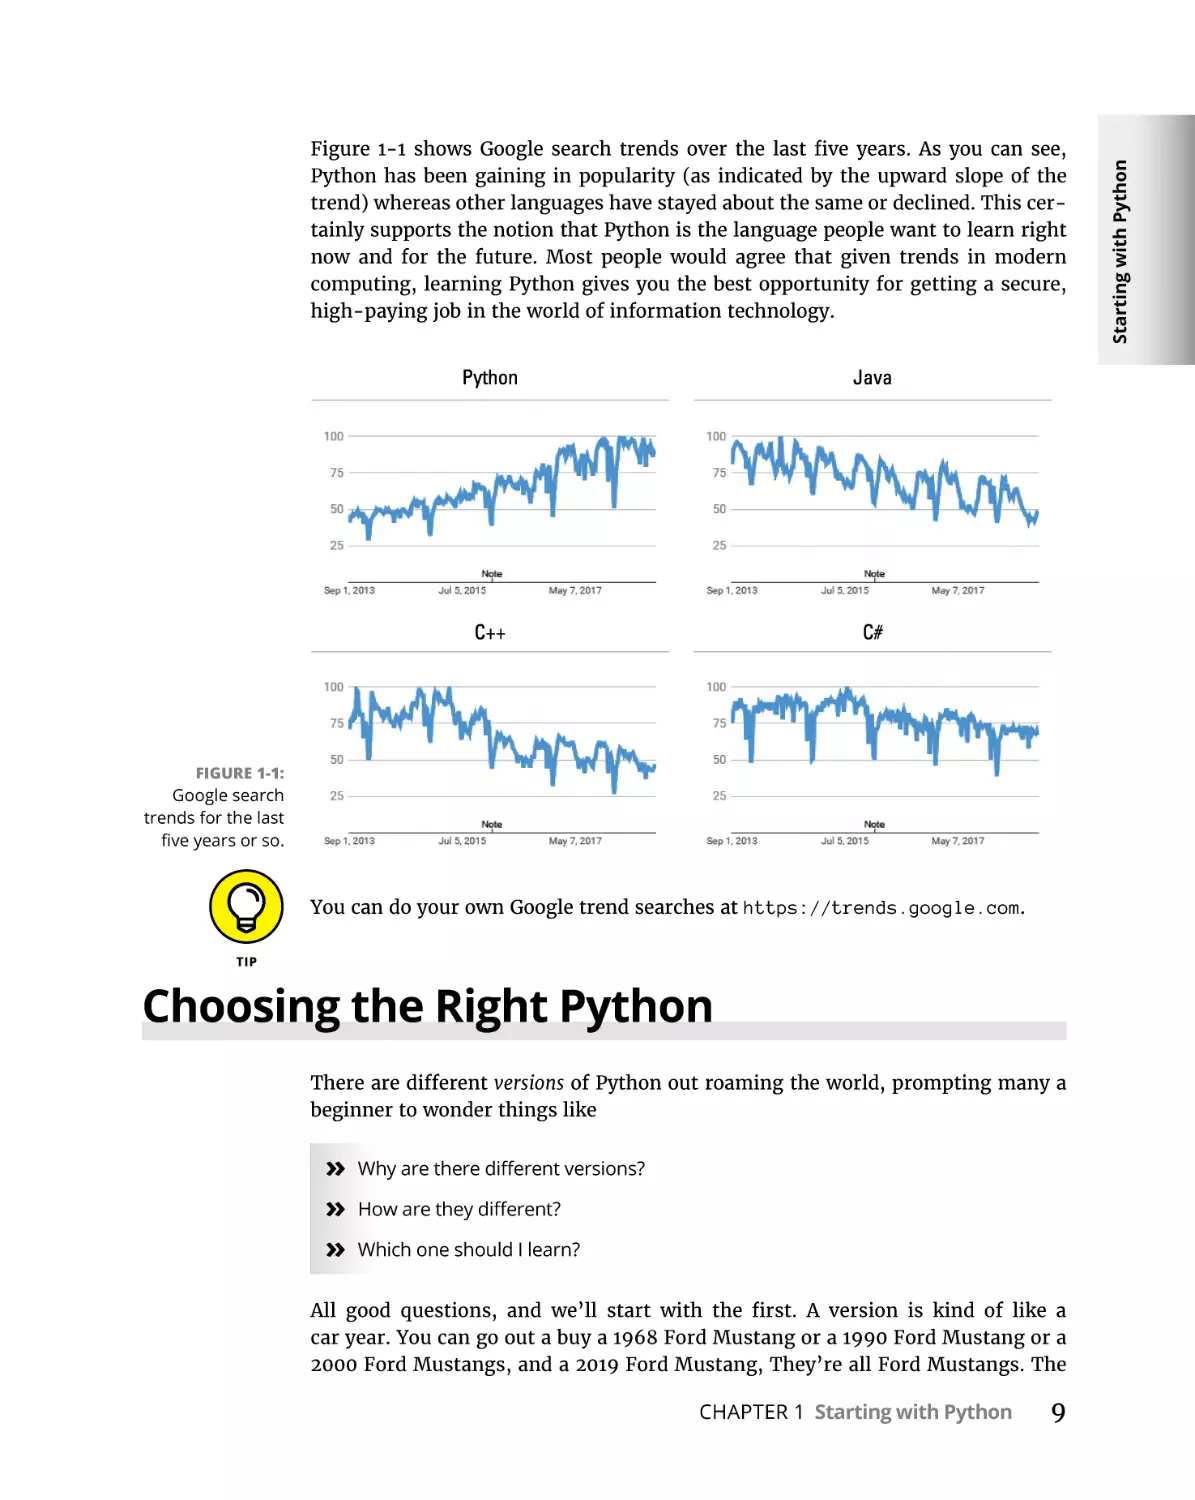 Choosing the Right Python